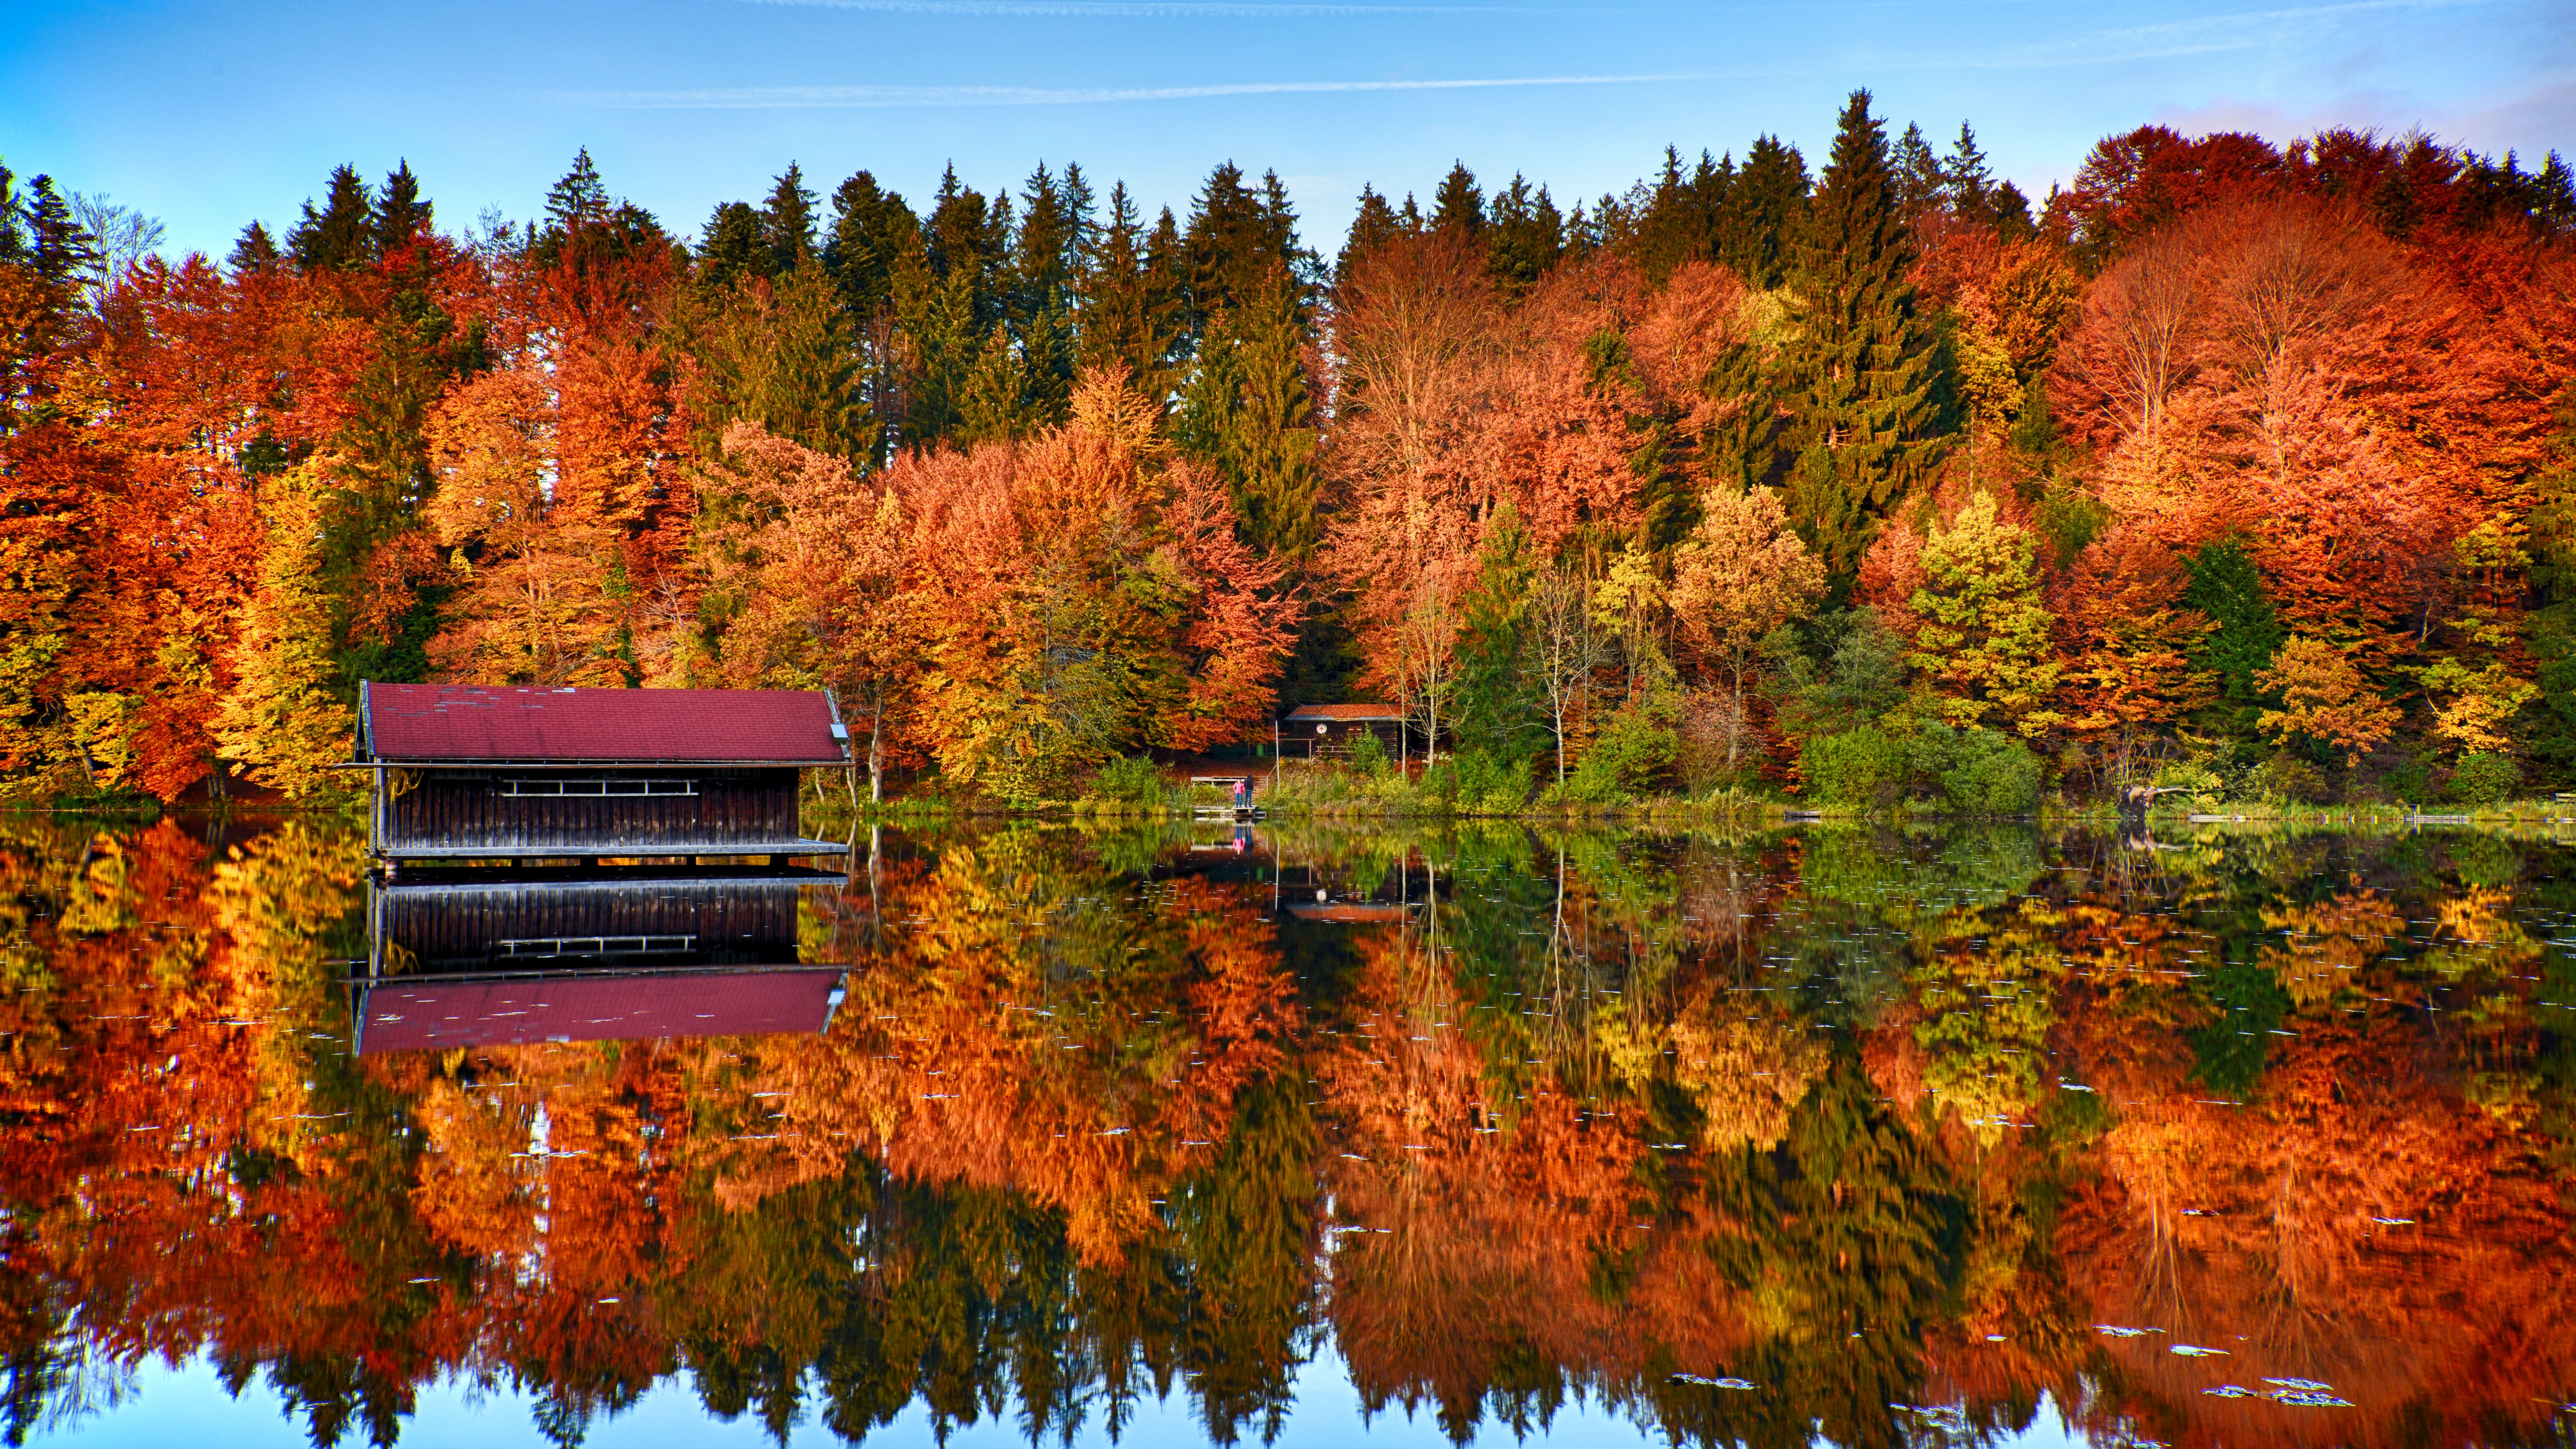 fall lake desktop background